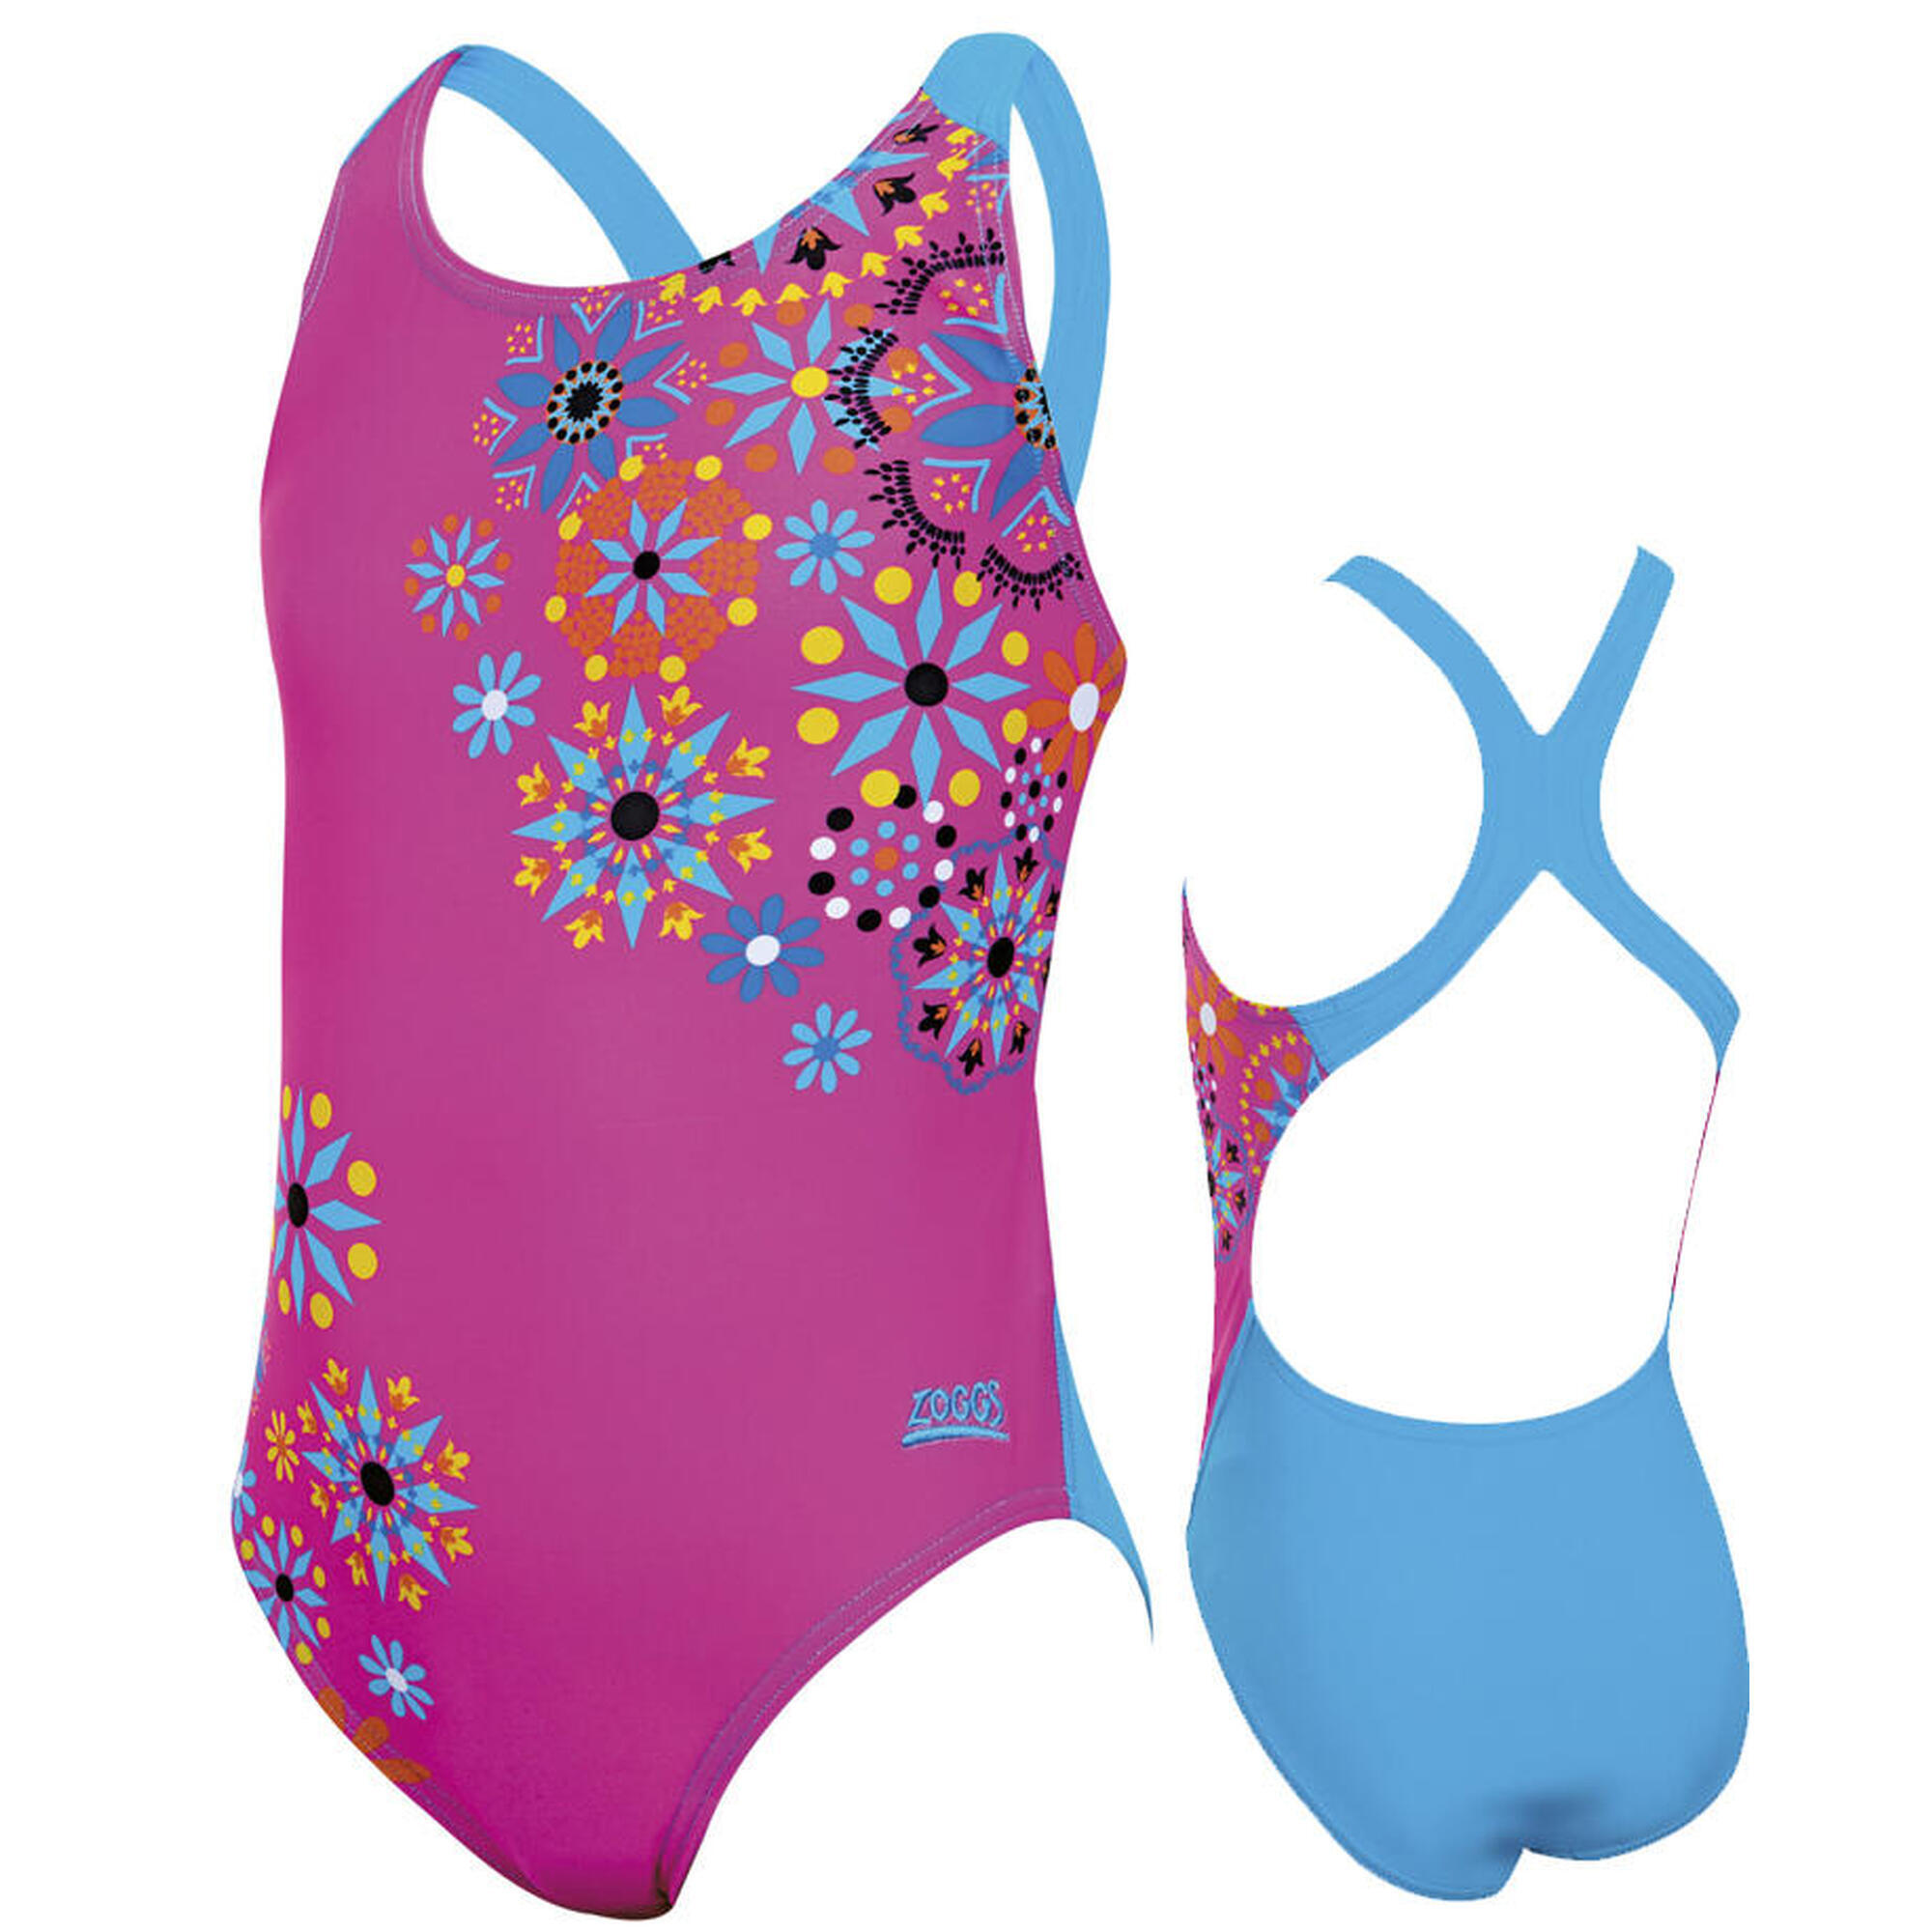 Girl Swim Suit - Pink/Blue